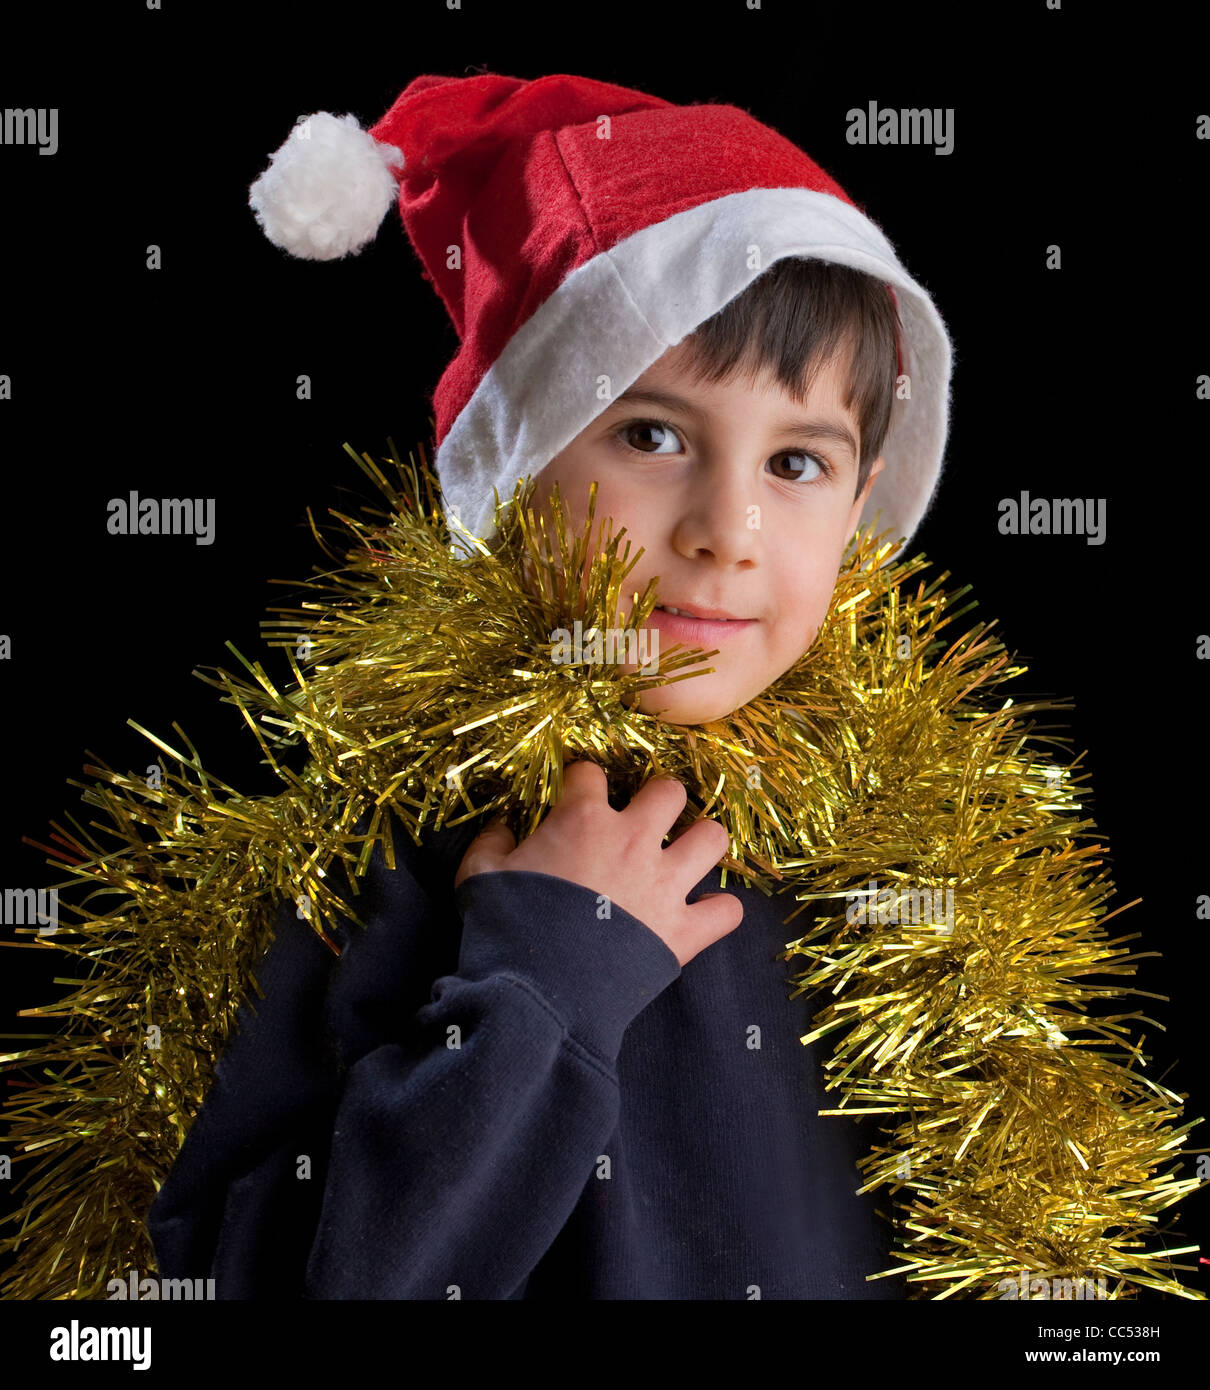 Boy wearing Santa hat with tinsel Stock Photo